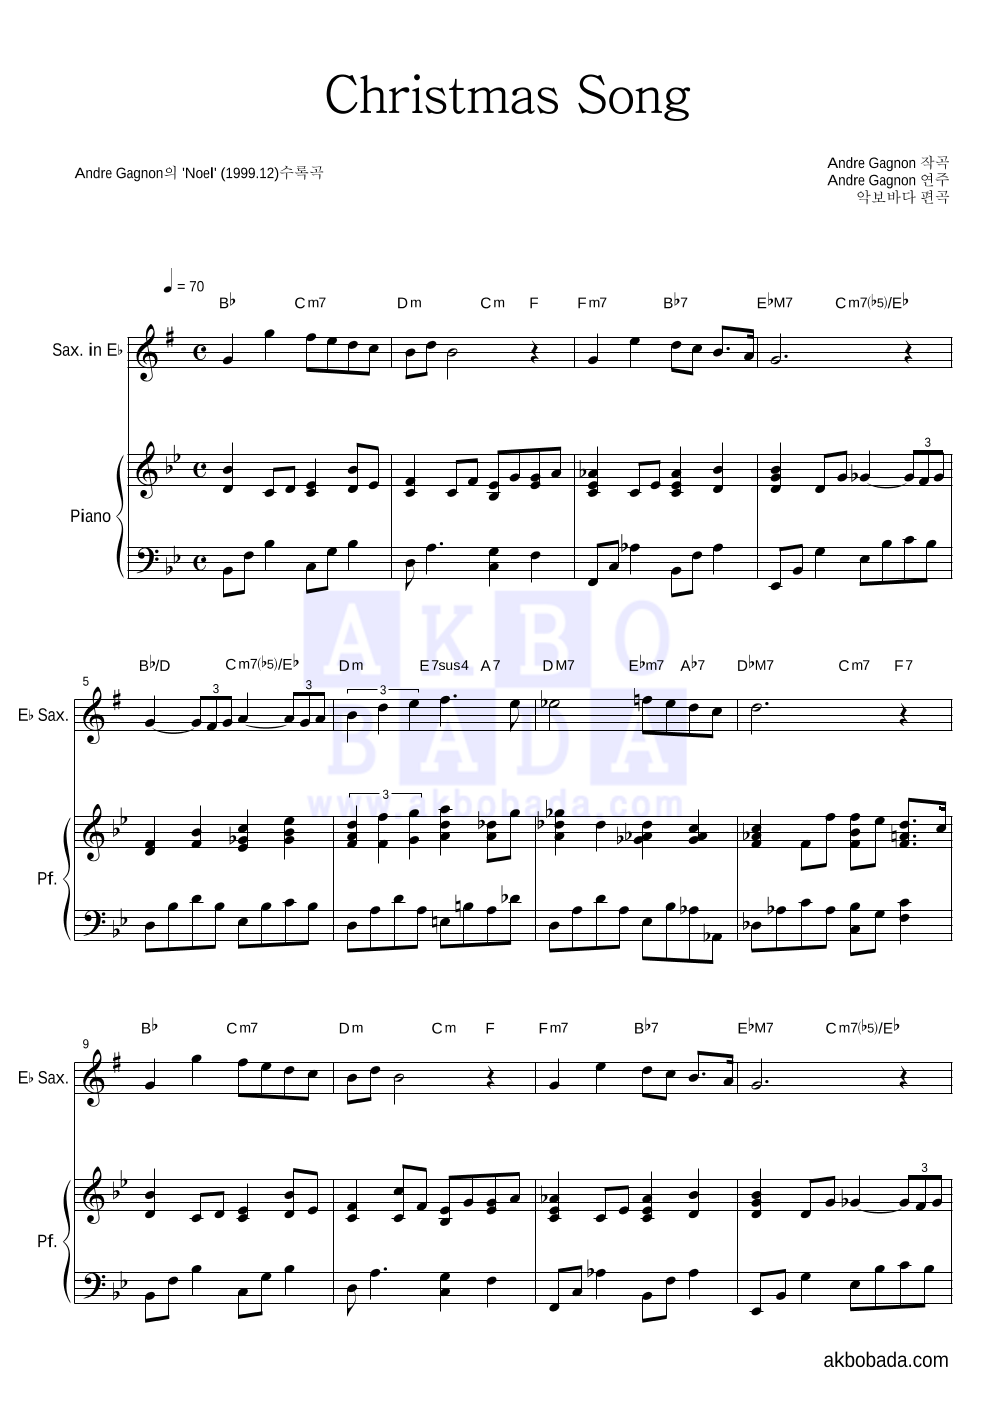 Andre Gagnon - Christmas Song Eb색소폰&피아노 악보 